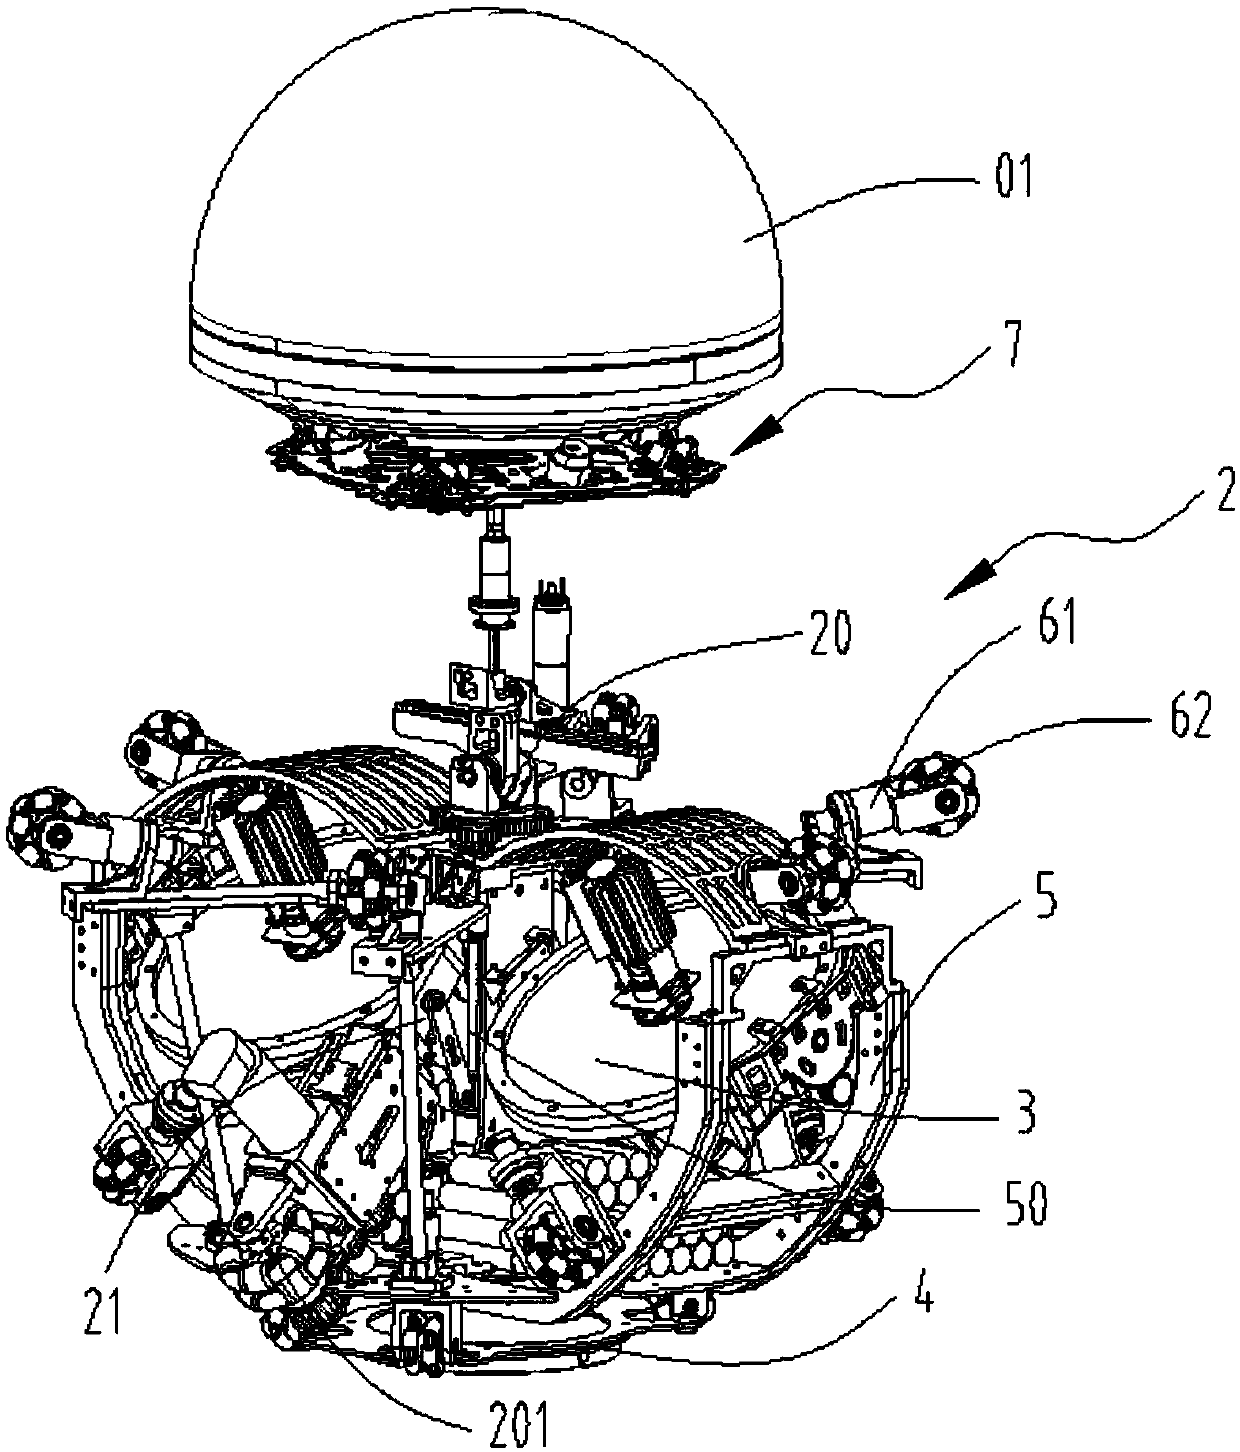 spherical robot